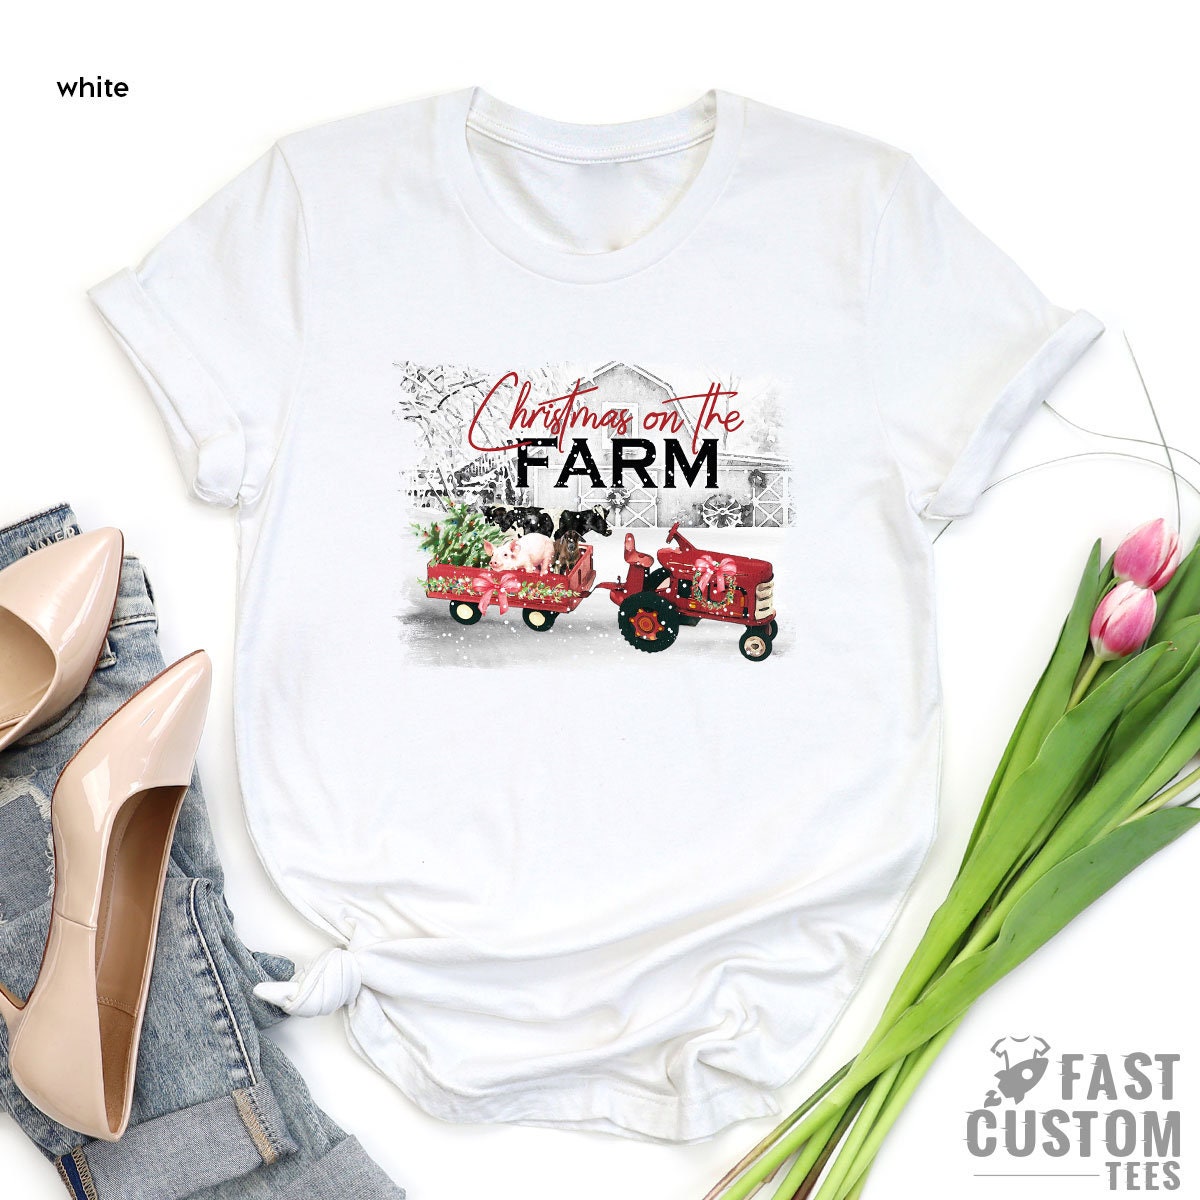 Christmas on the Farm T-shirt, Christmas Women T-Shirt, Women Christmas Gift, Farm Christmas Shirt, Xmas Gift, Cute Family Christmas Tee - Fastdeliverytees.com